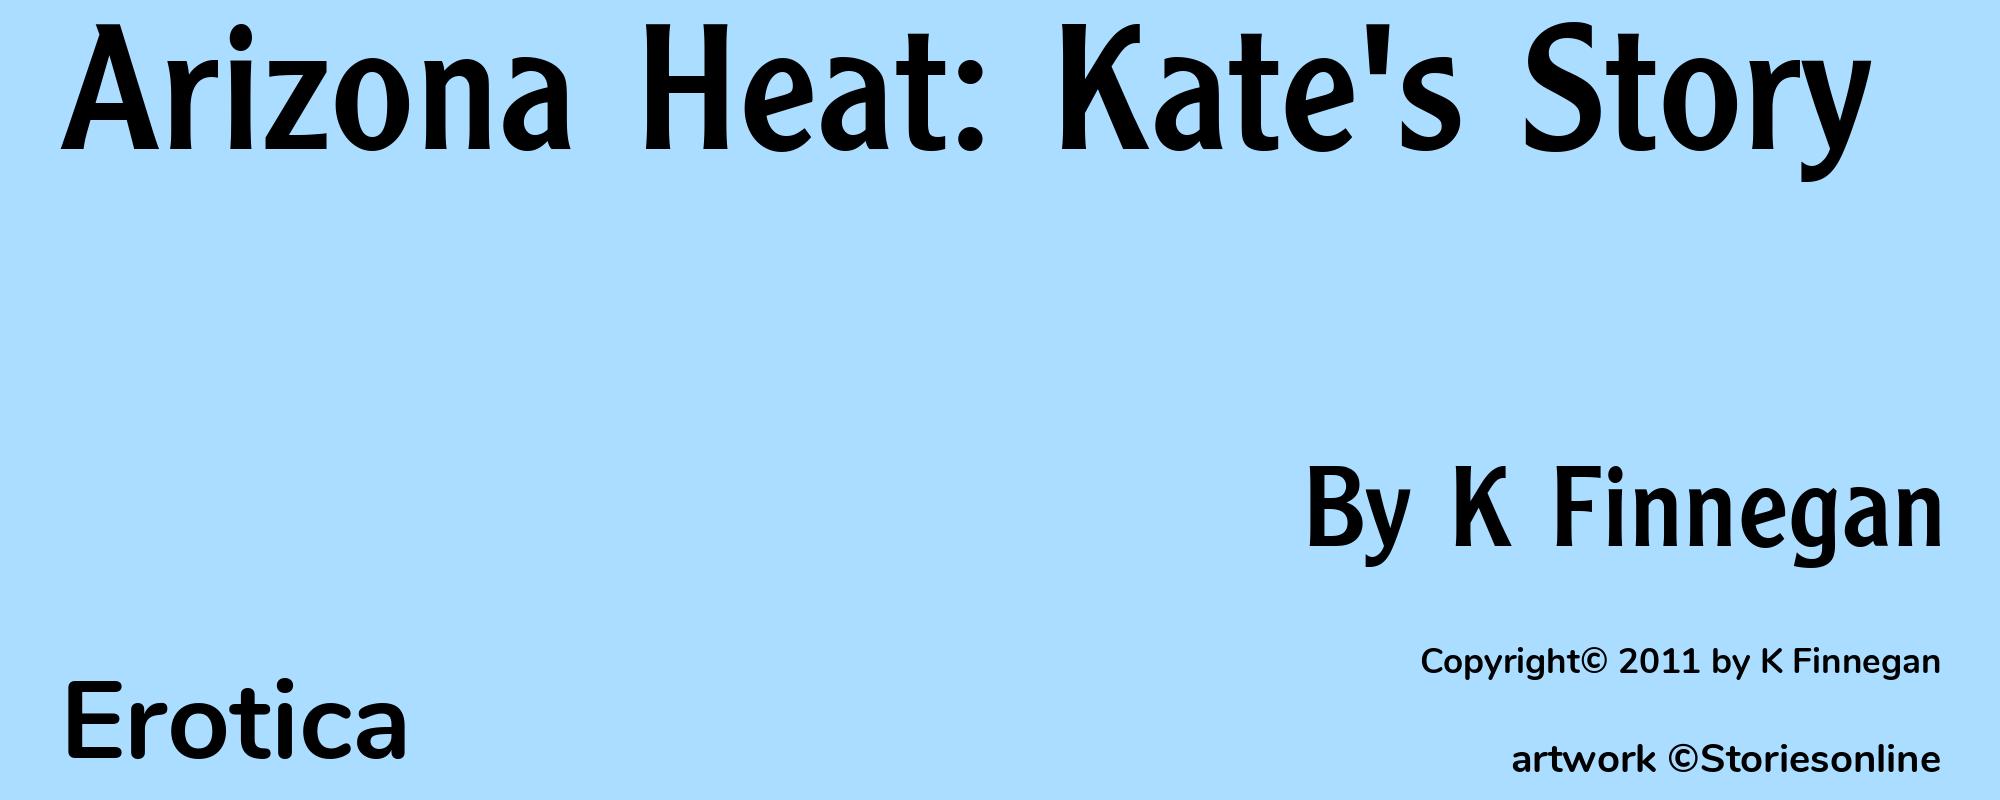 Arizona Heat: Kate's Story - Cover